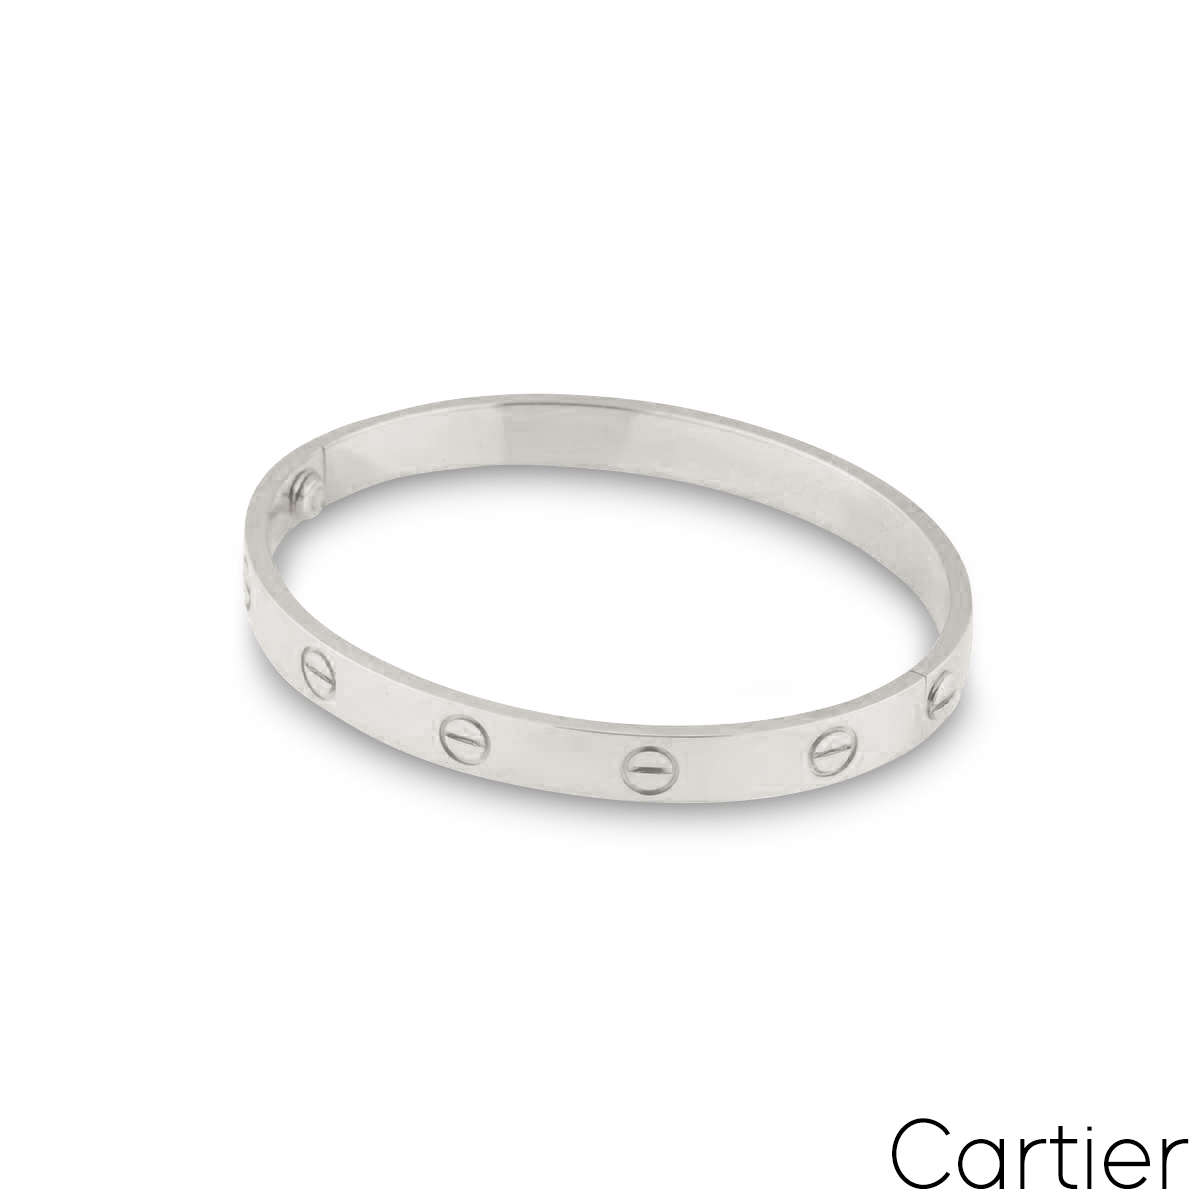 Cartier White Gold Plain Love Bracelet Size 17 B6035417